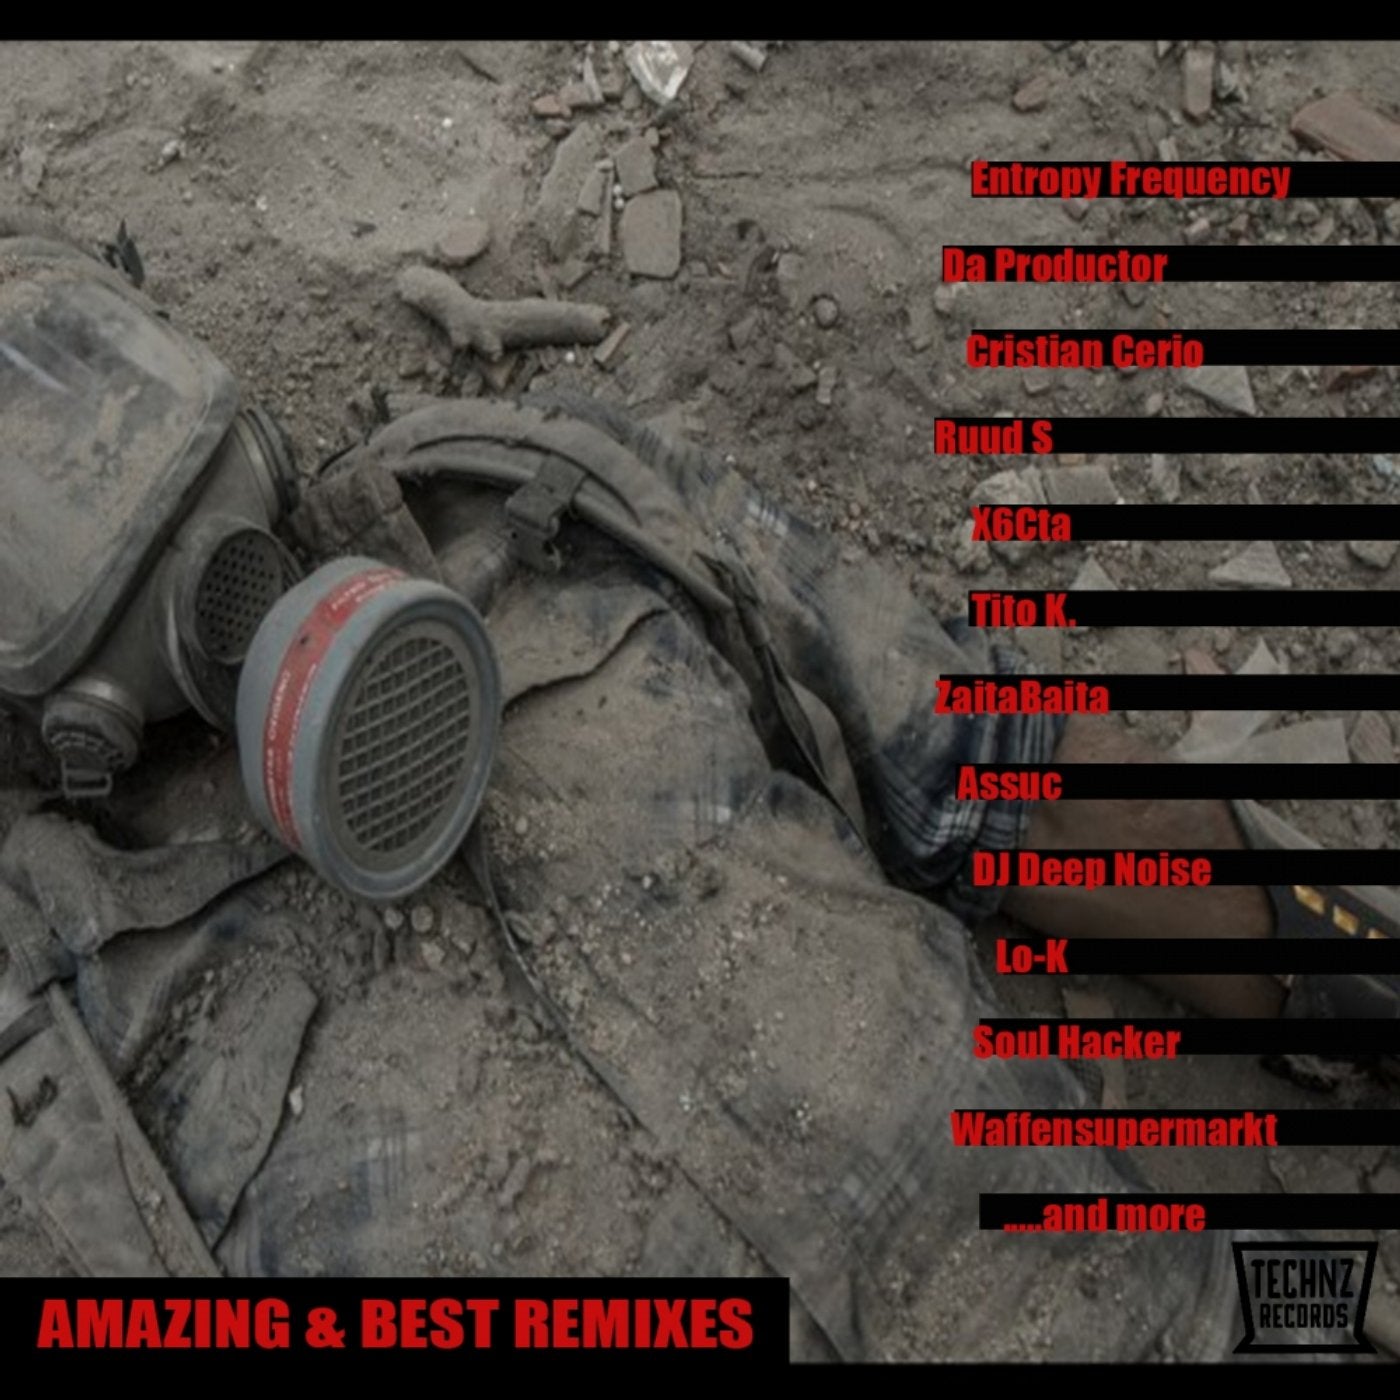 Amazing & Best Remixes